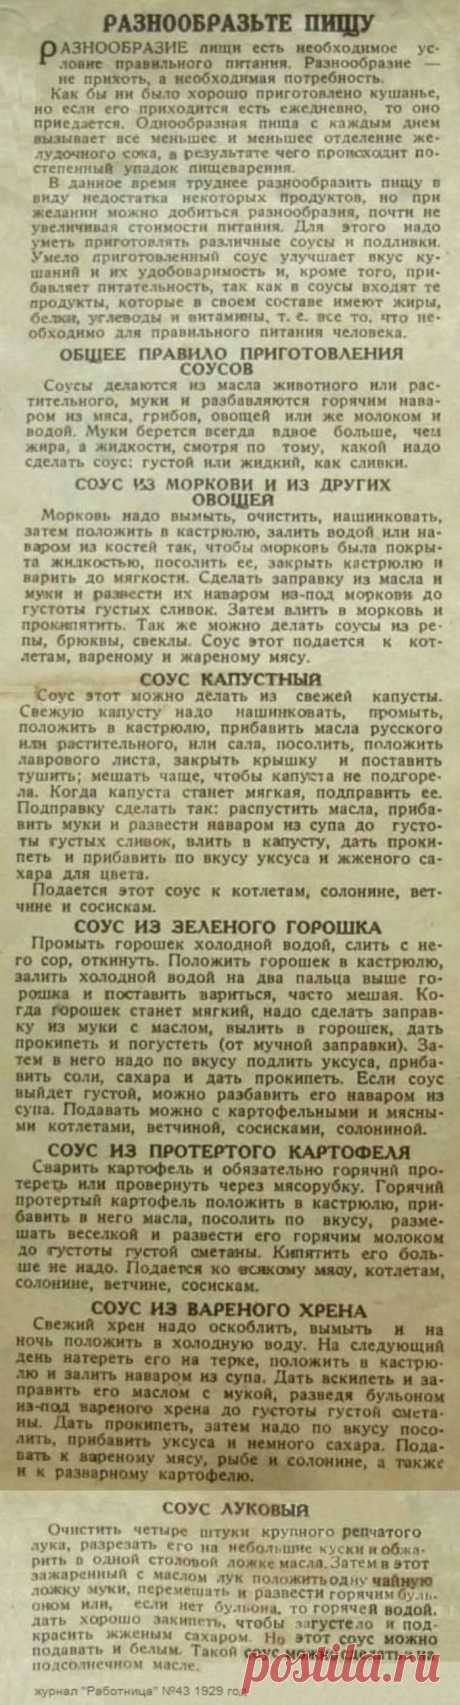 Соусы (рецепты из журнала Работница 1929 год)